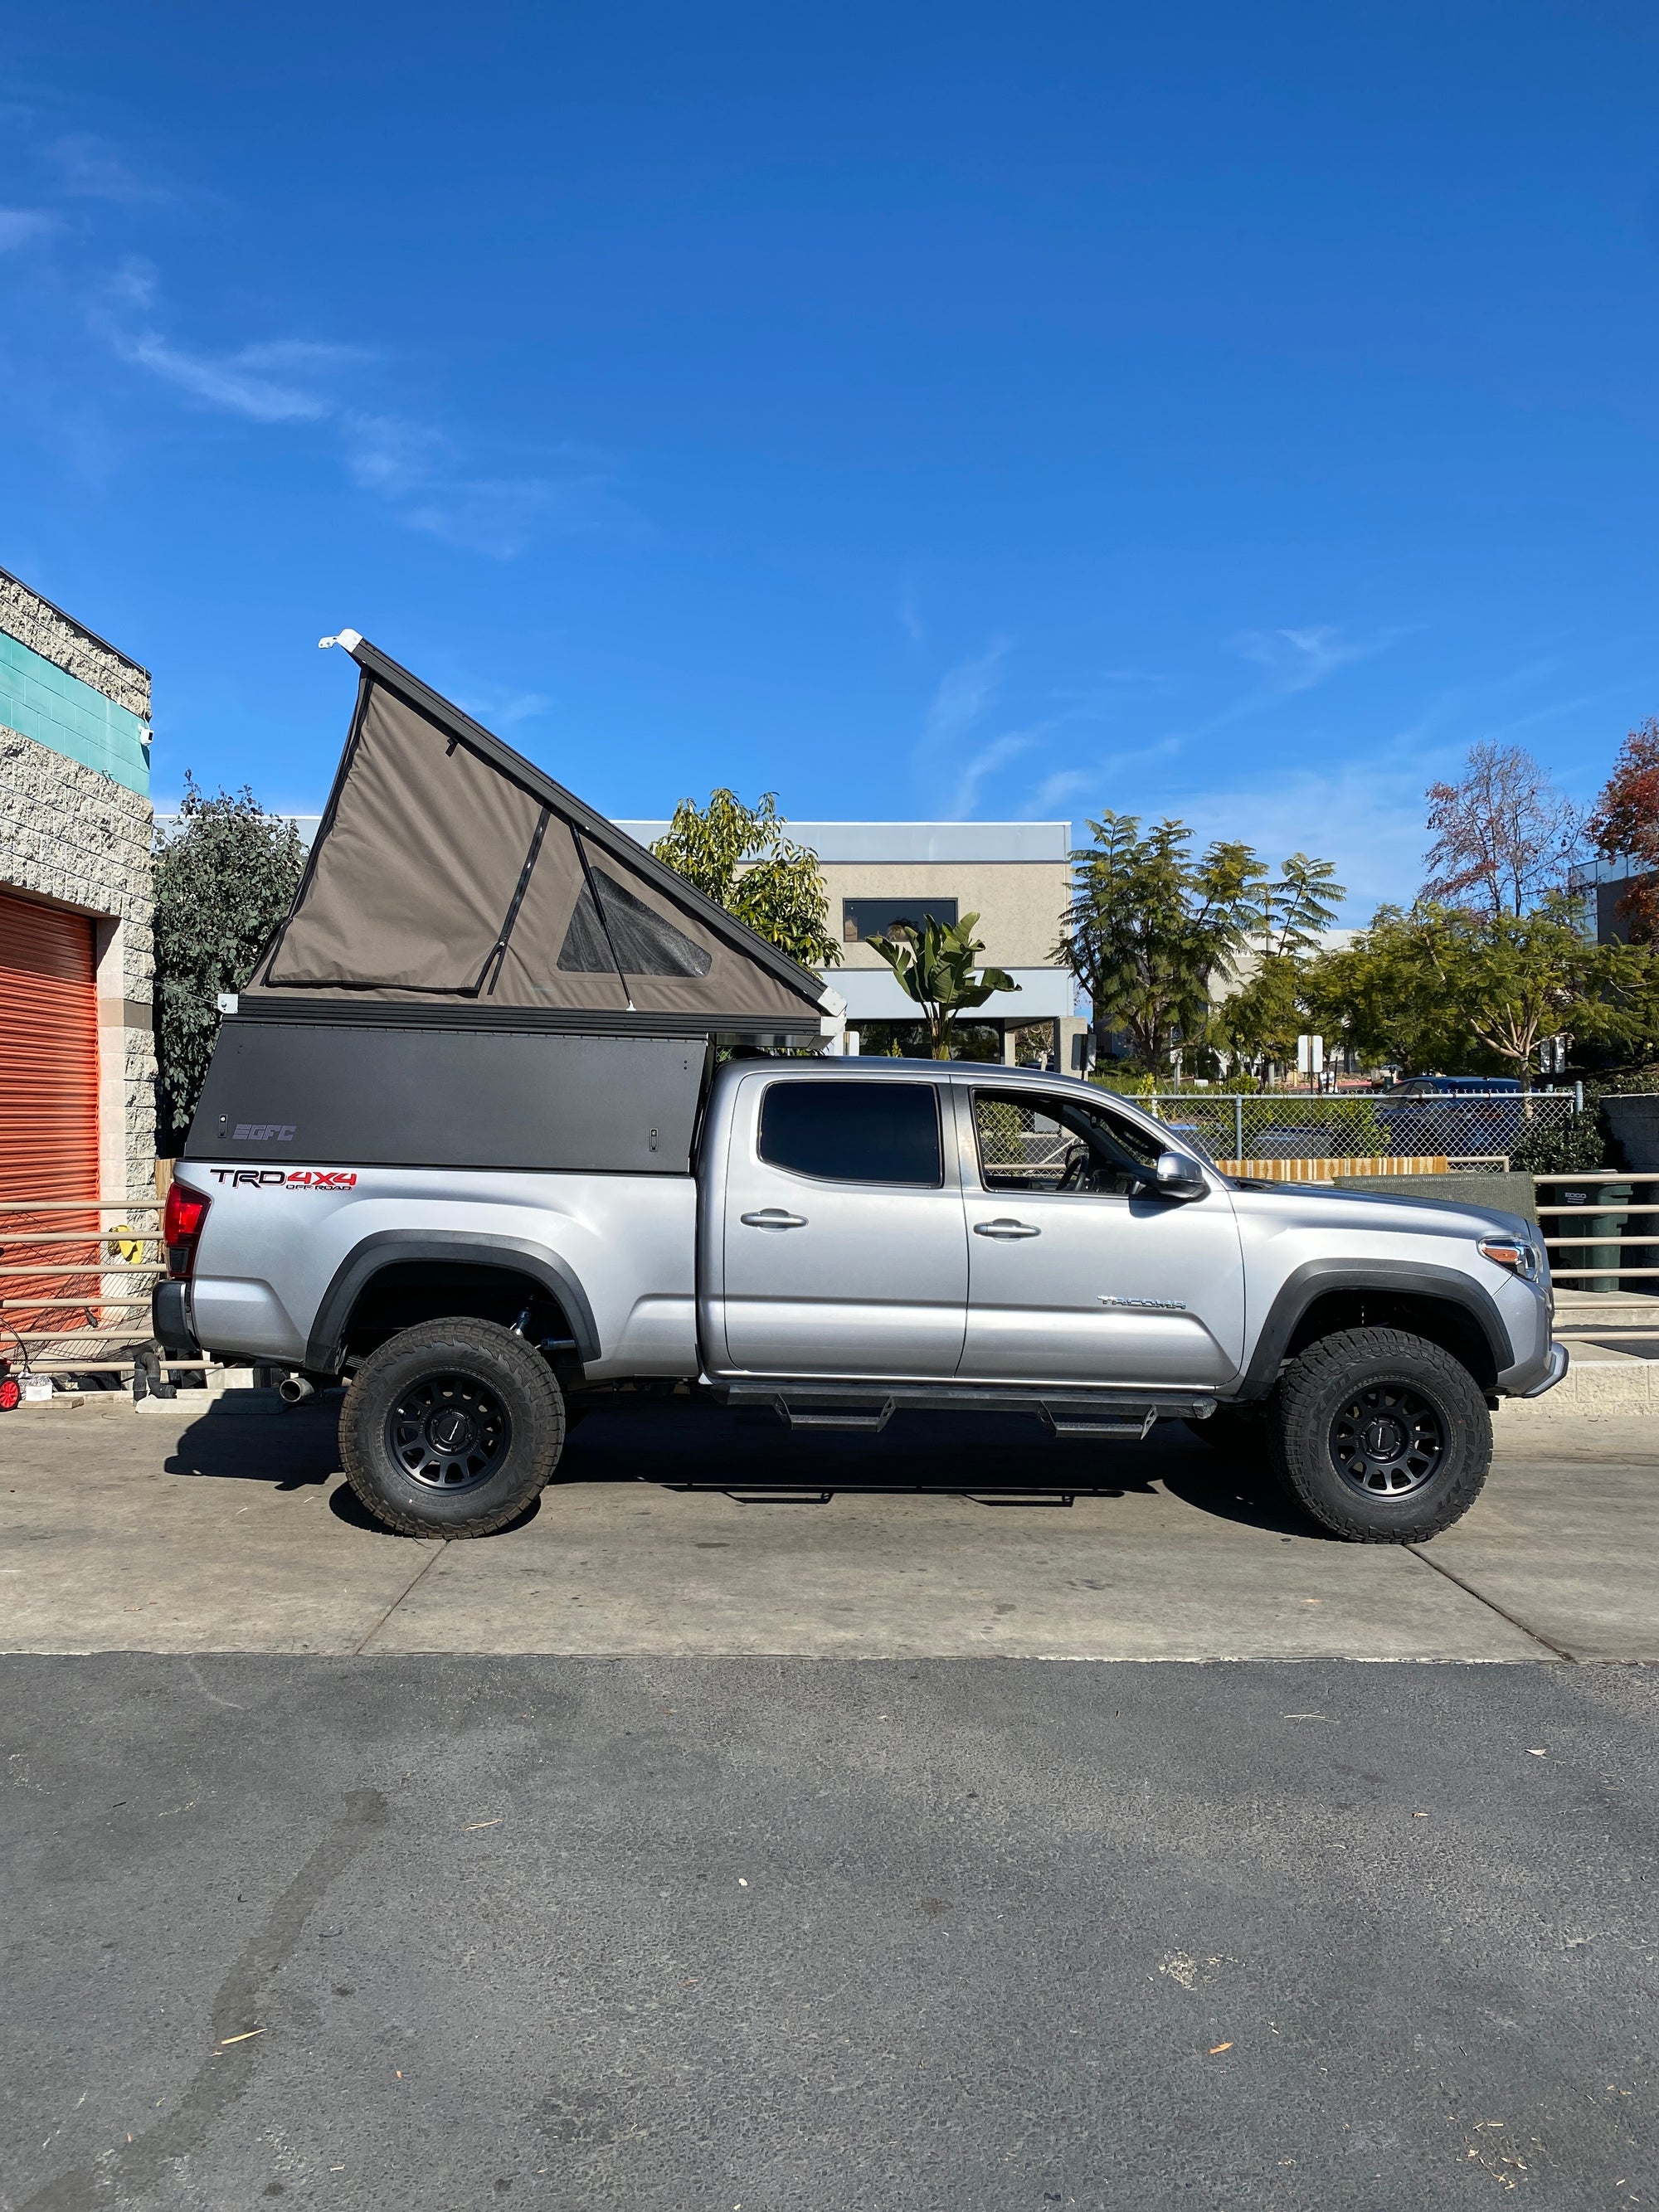 2018 Toyota Tacoma Camper - Build #4601